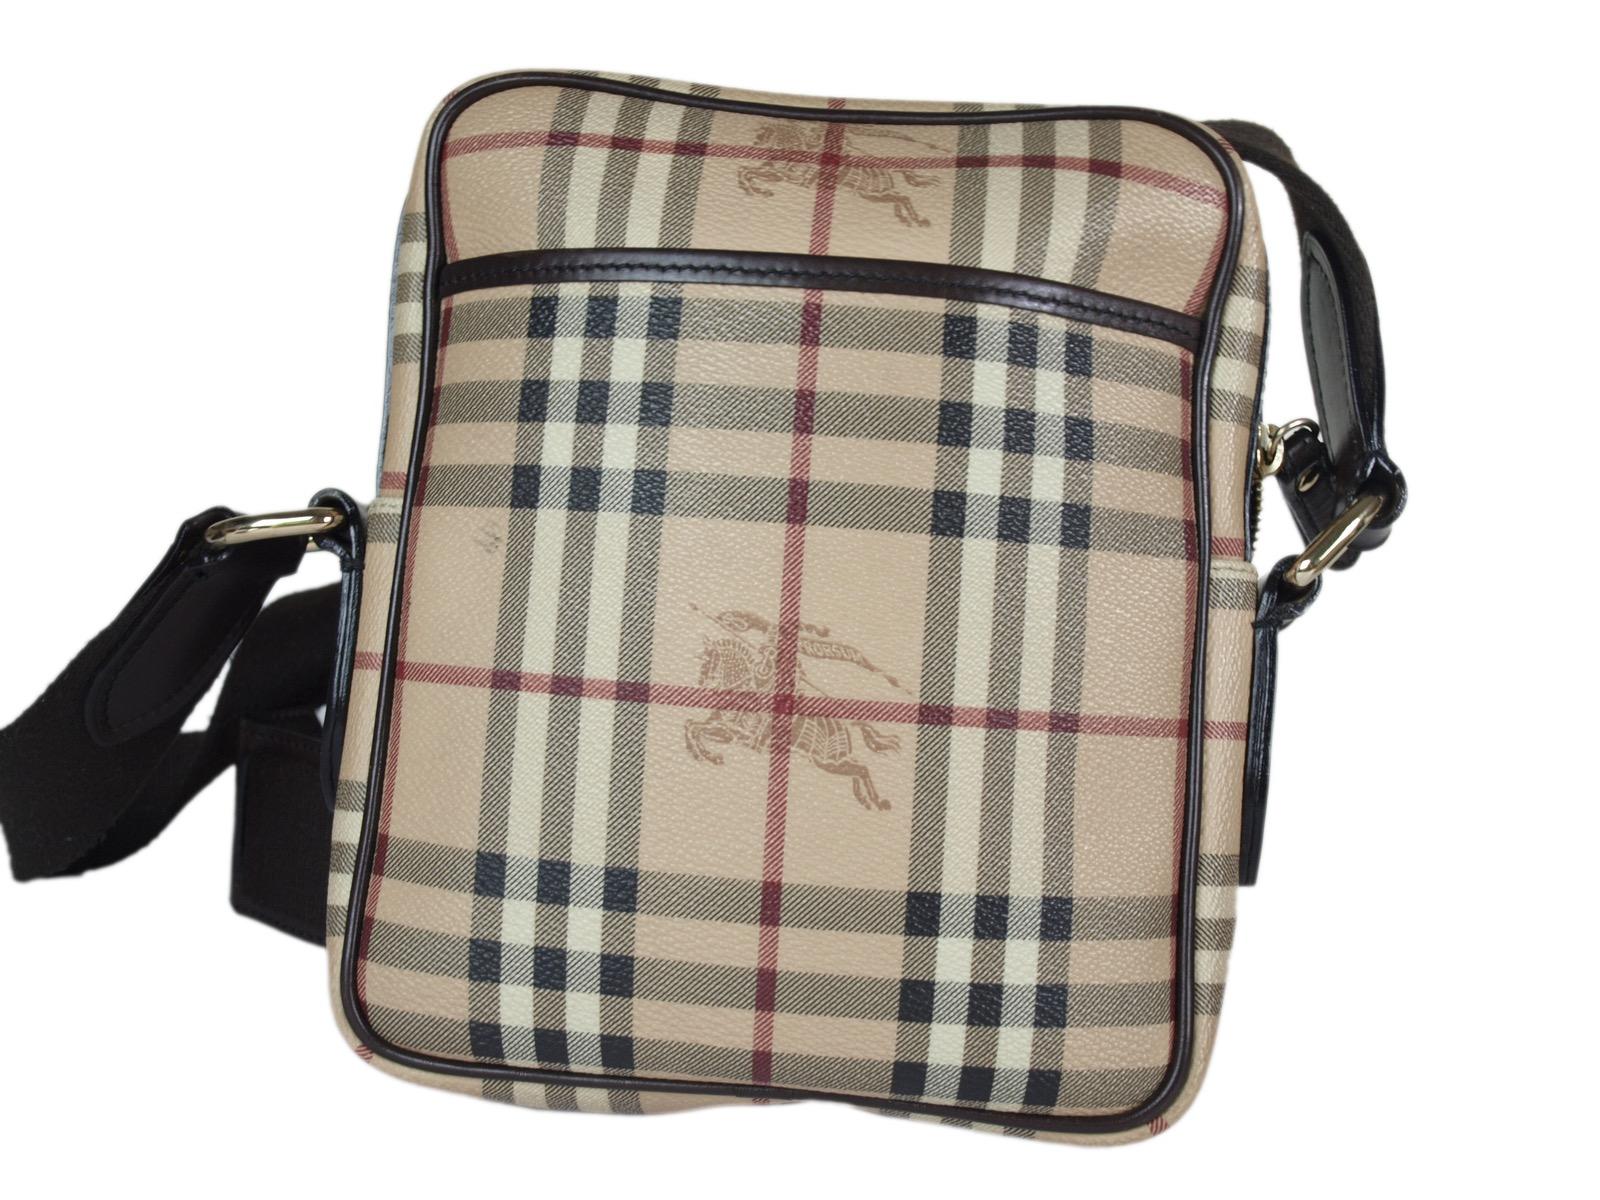 BURBERRY PVC Canvas Leather Beige Crossbody Shoulder Bag BS0436 | eBay